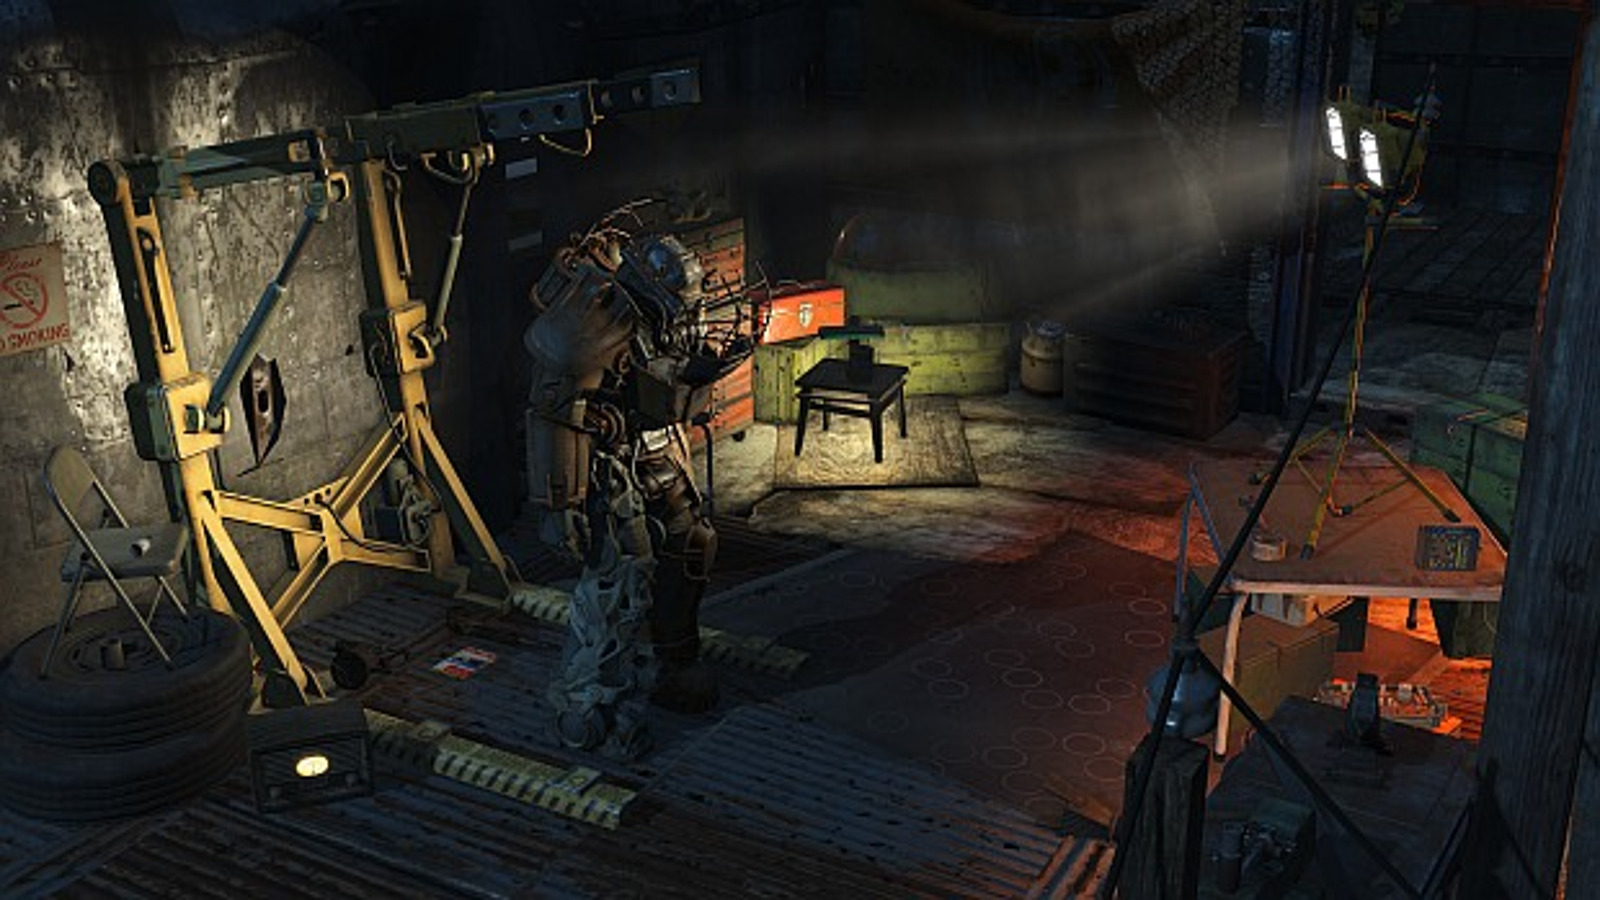 Fallout 3 for Xbox 360 - Cheats, Codes, Guide, Walkthrough, Tips